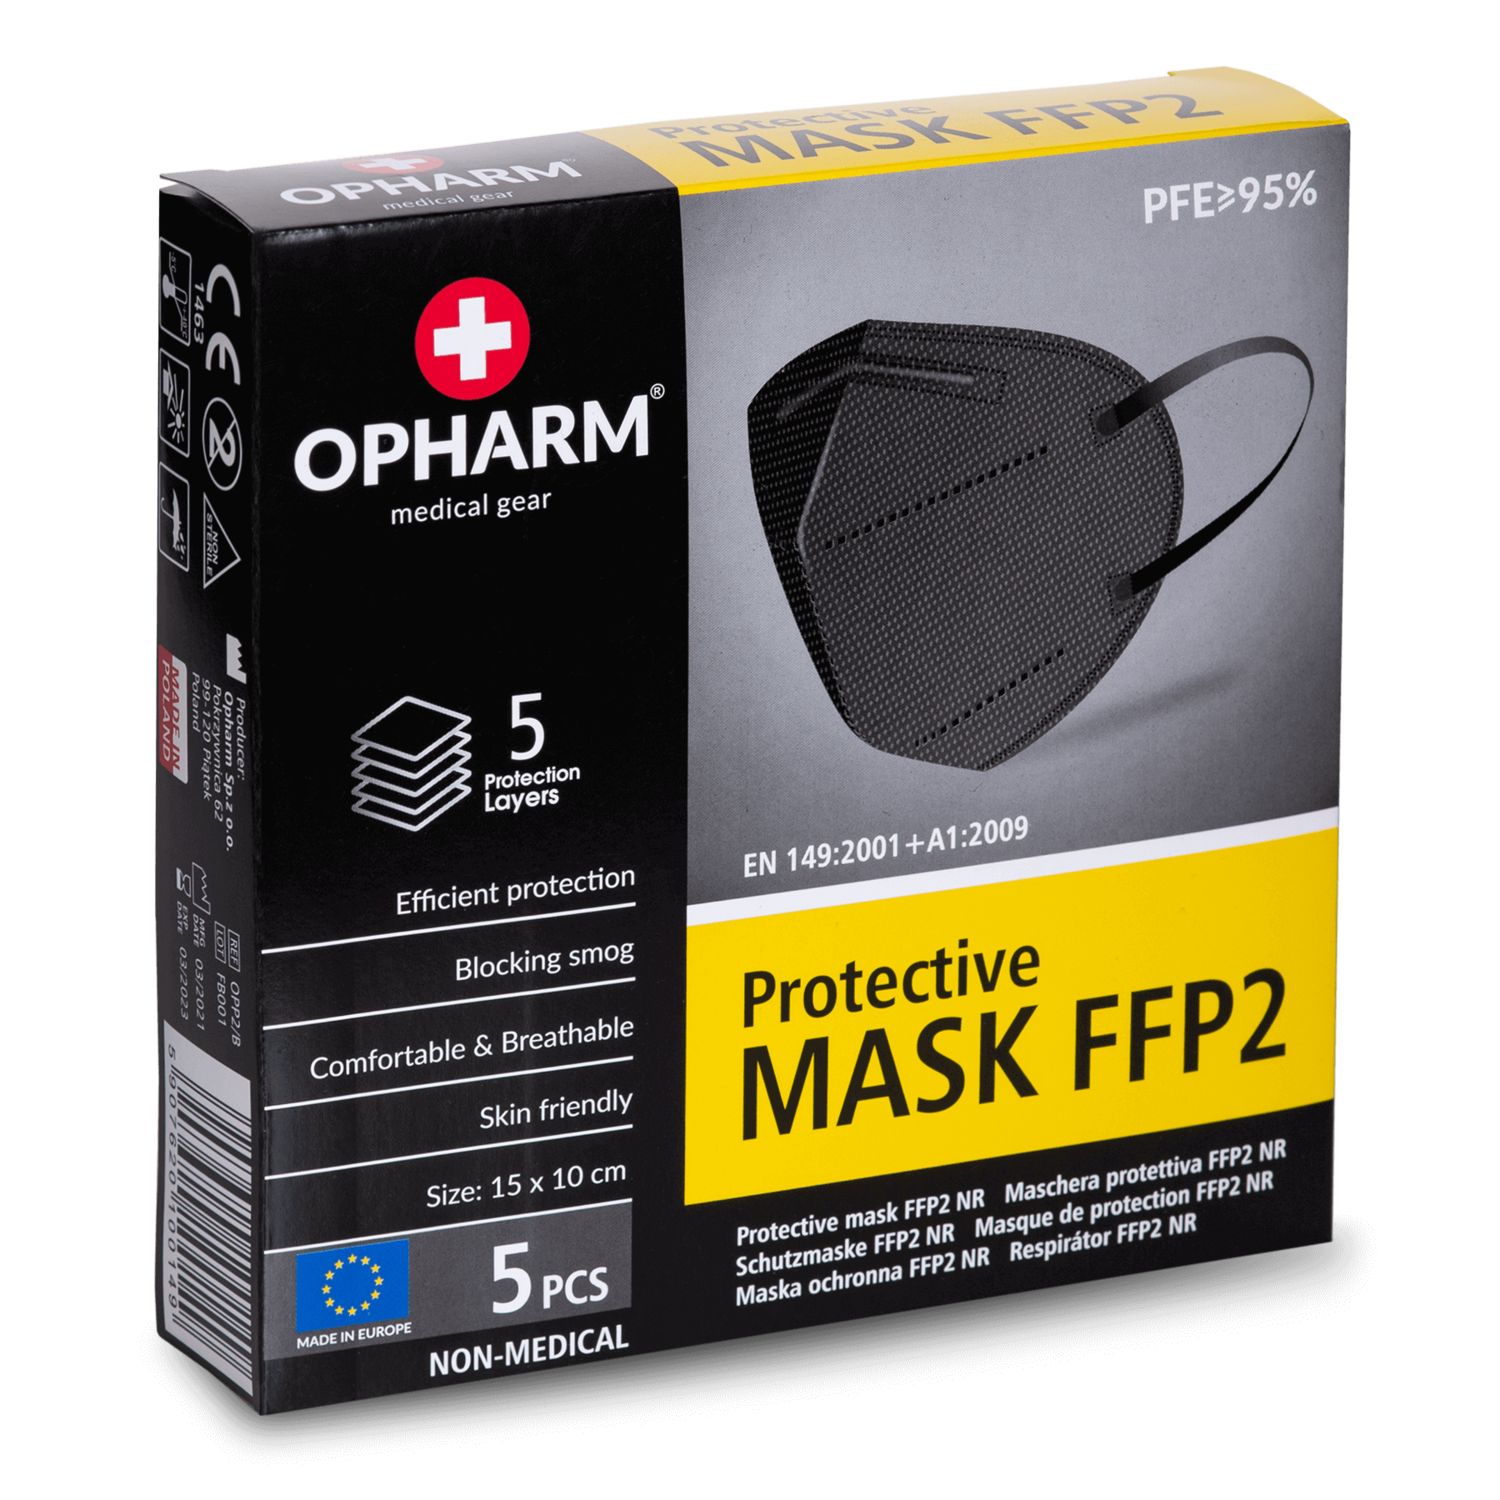 Masque FFP2 KF 94 Blanc/Noir- Boite de 10 Masques Individuels - Carton de  61 boites, total